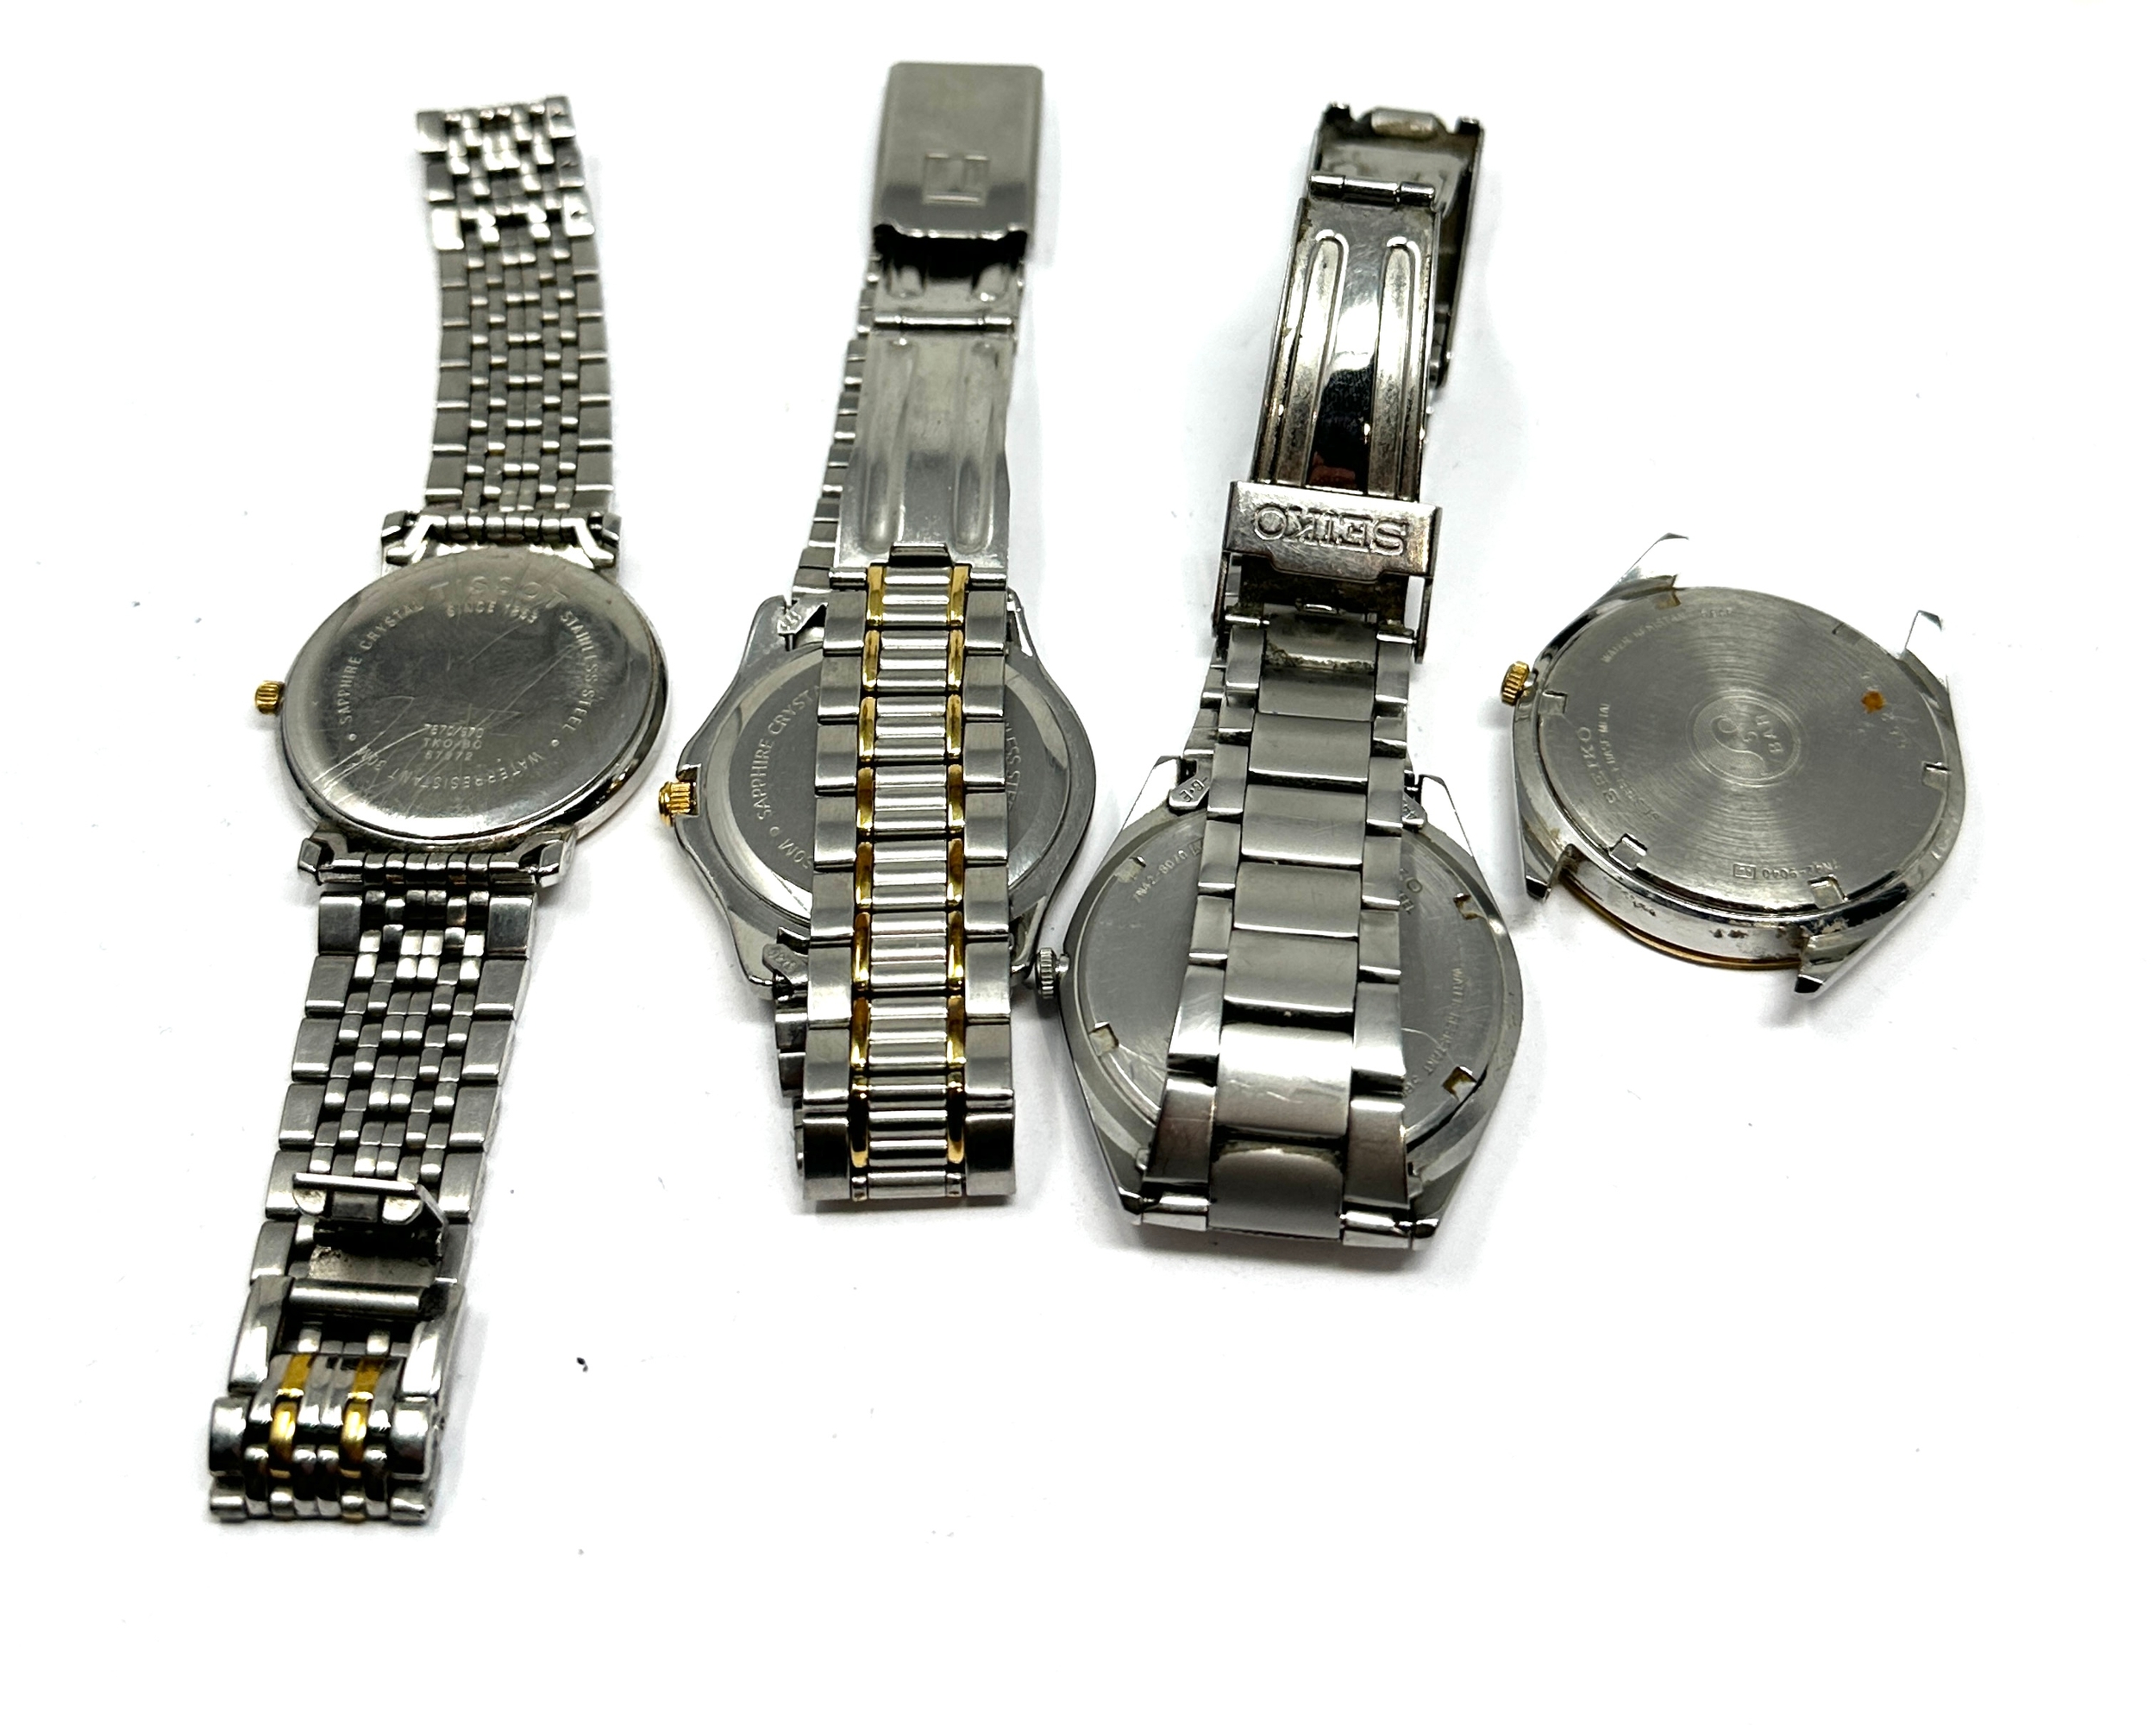 4 gemts quartz wristwatches tissot 1853 & seiko untested - Image 4 of 4